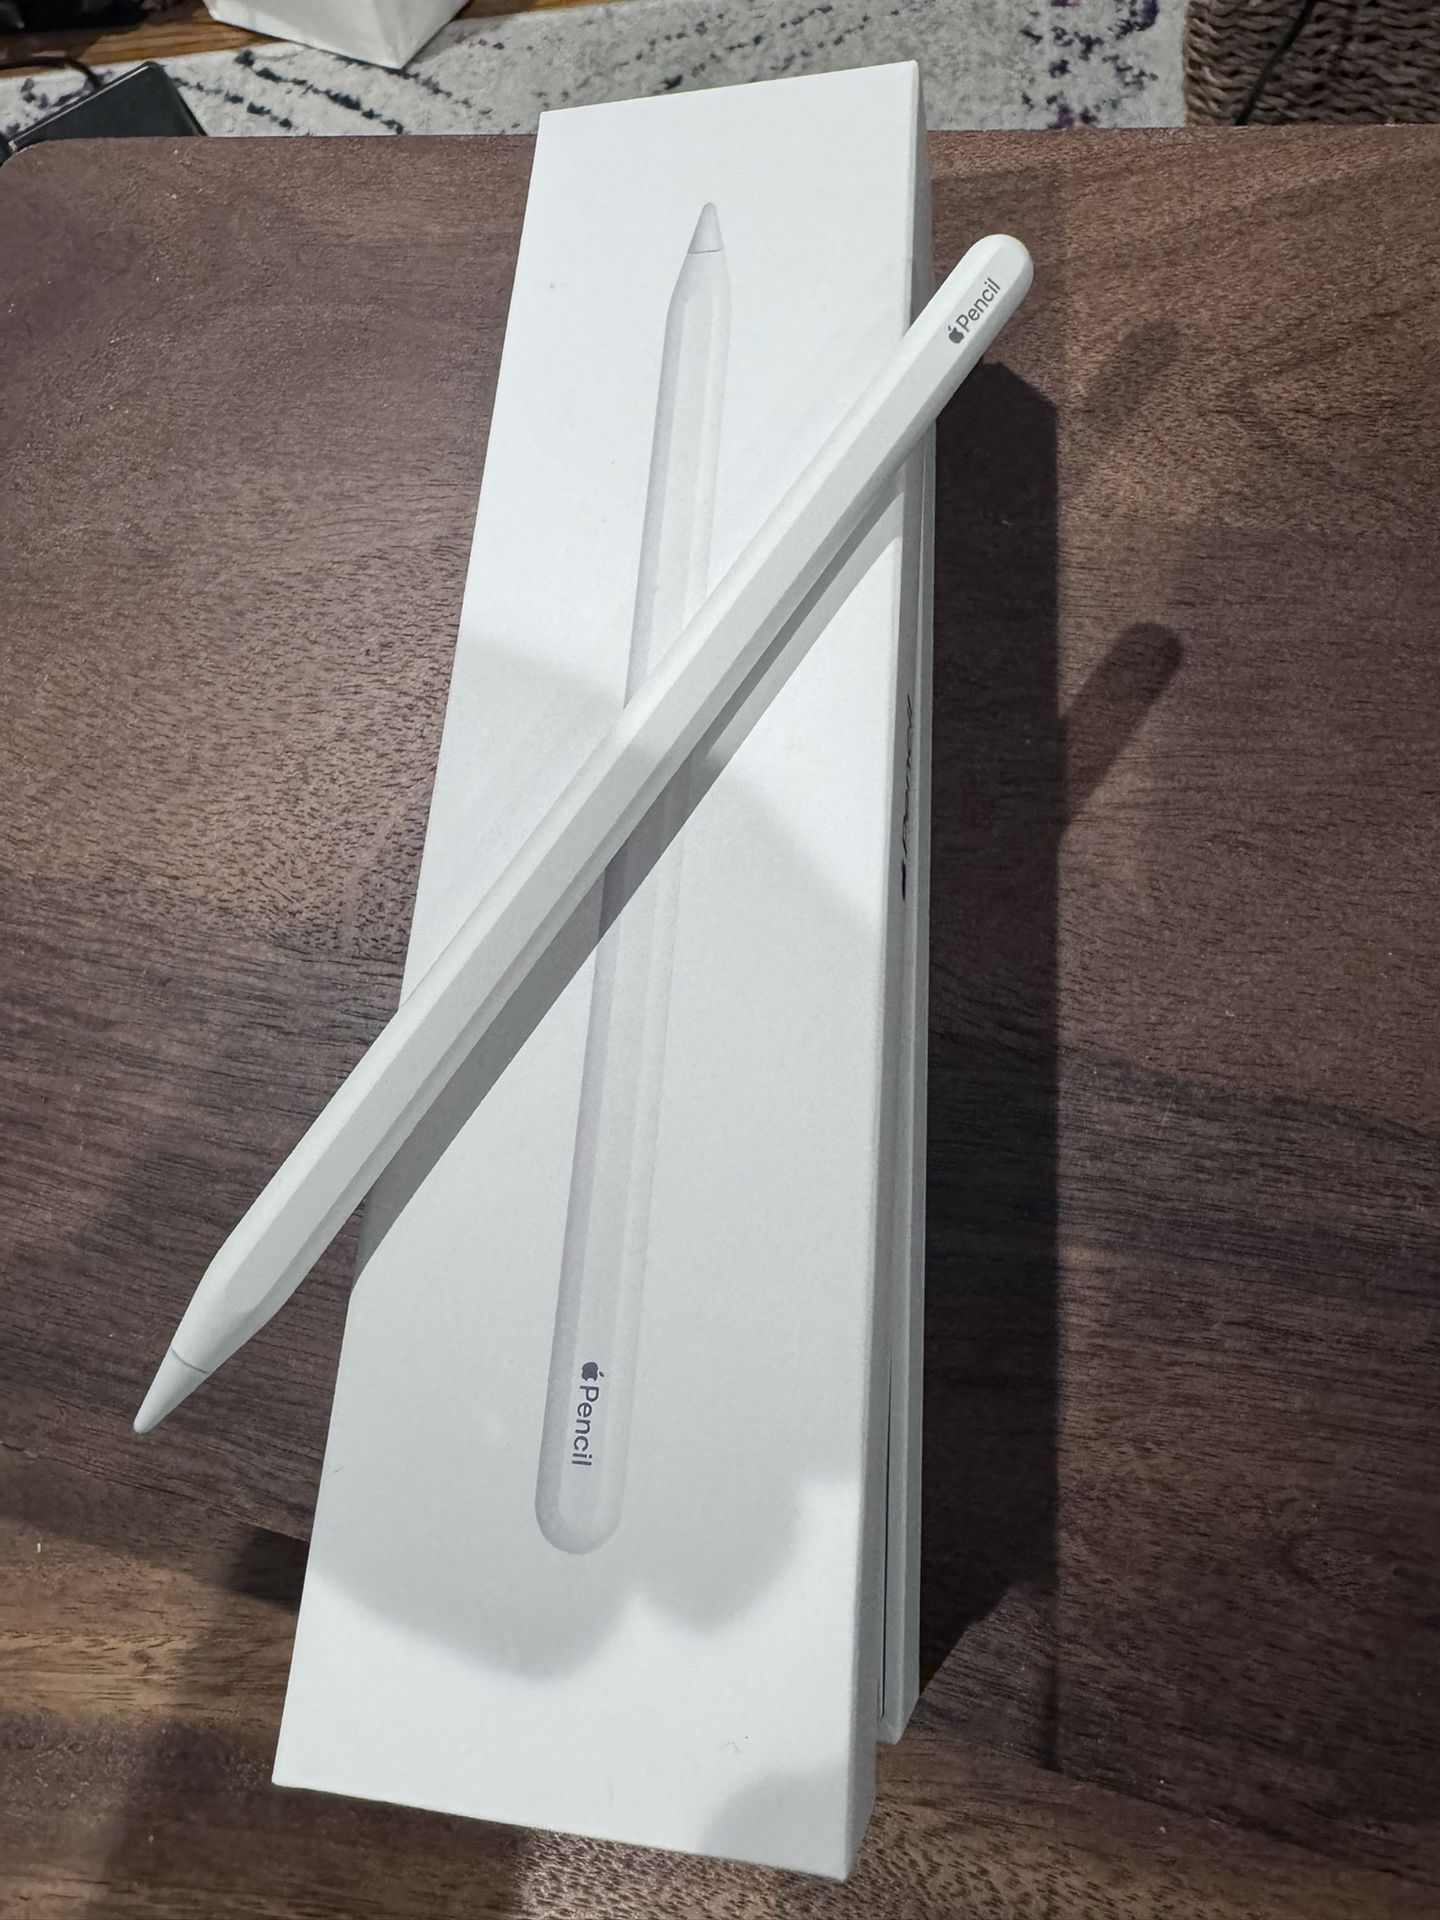 Apple Pencil For iPad